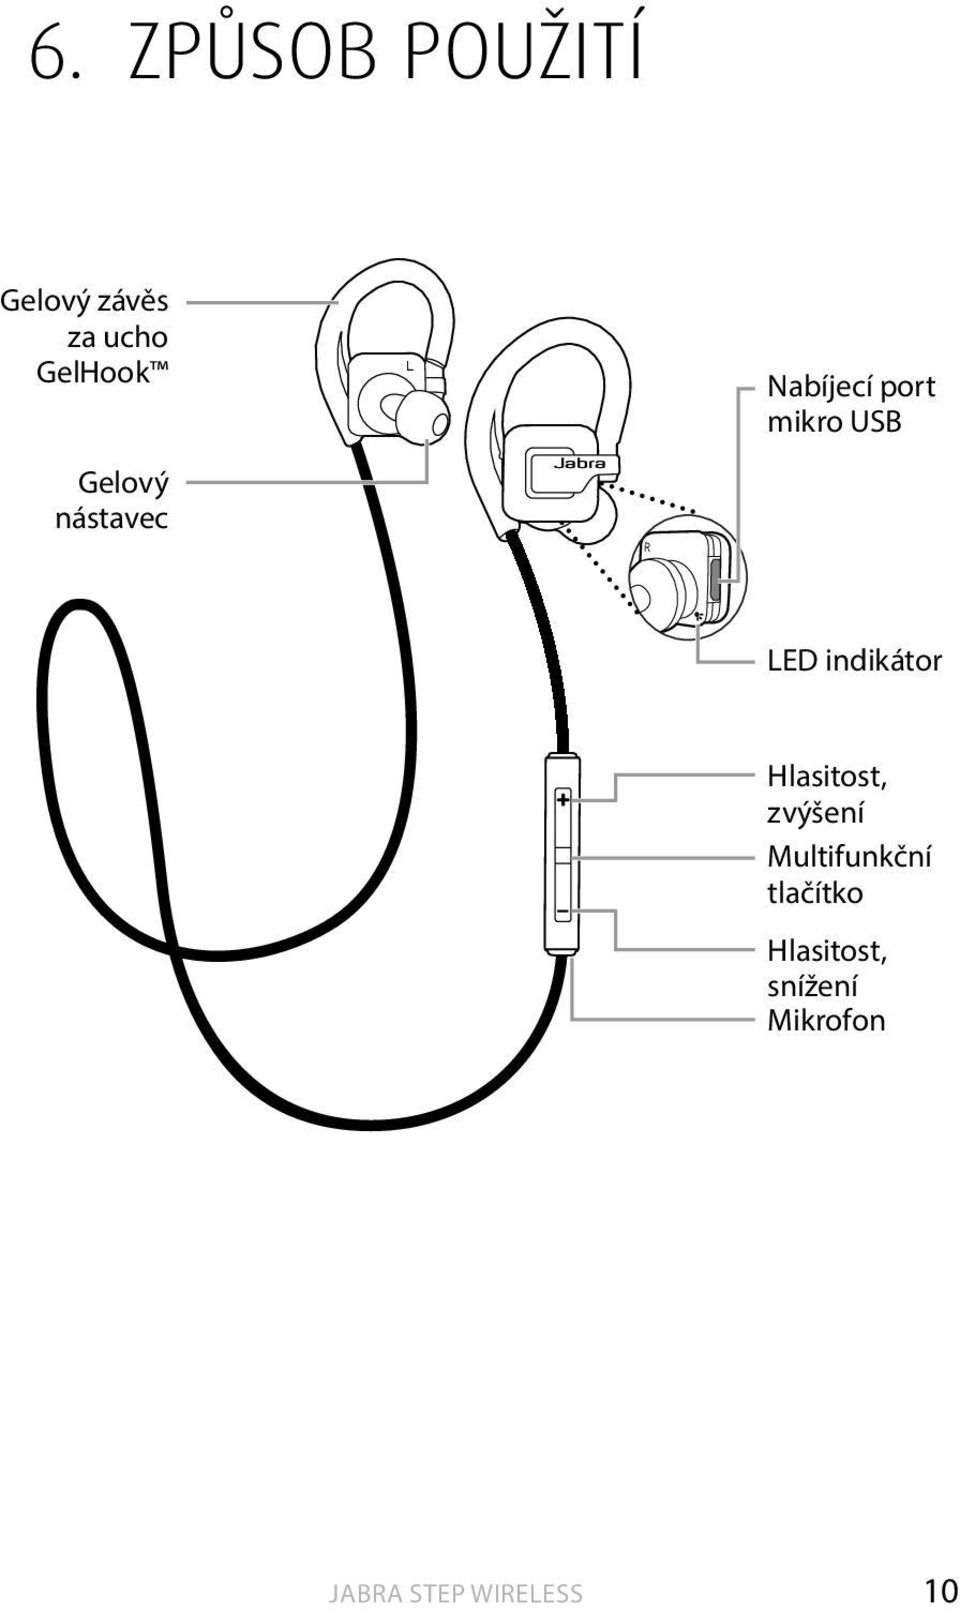 port mikro USB LED indikátor Hlasitost,